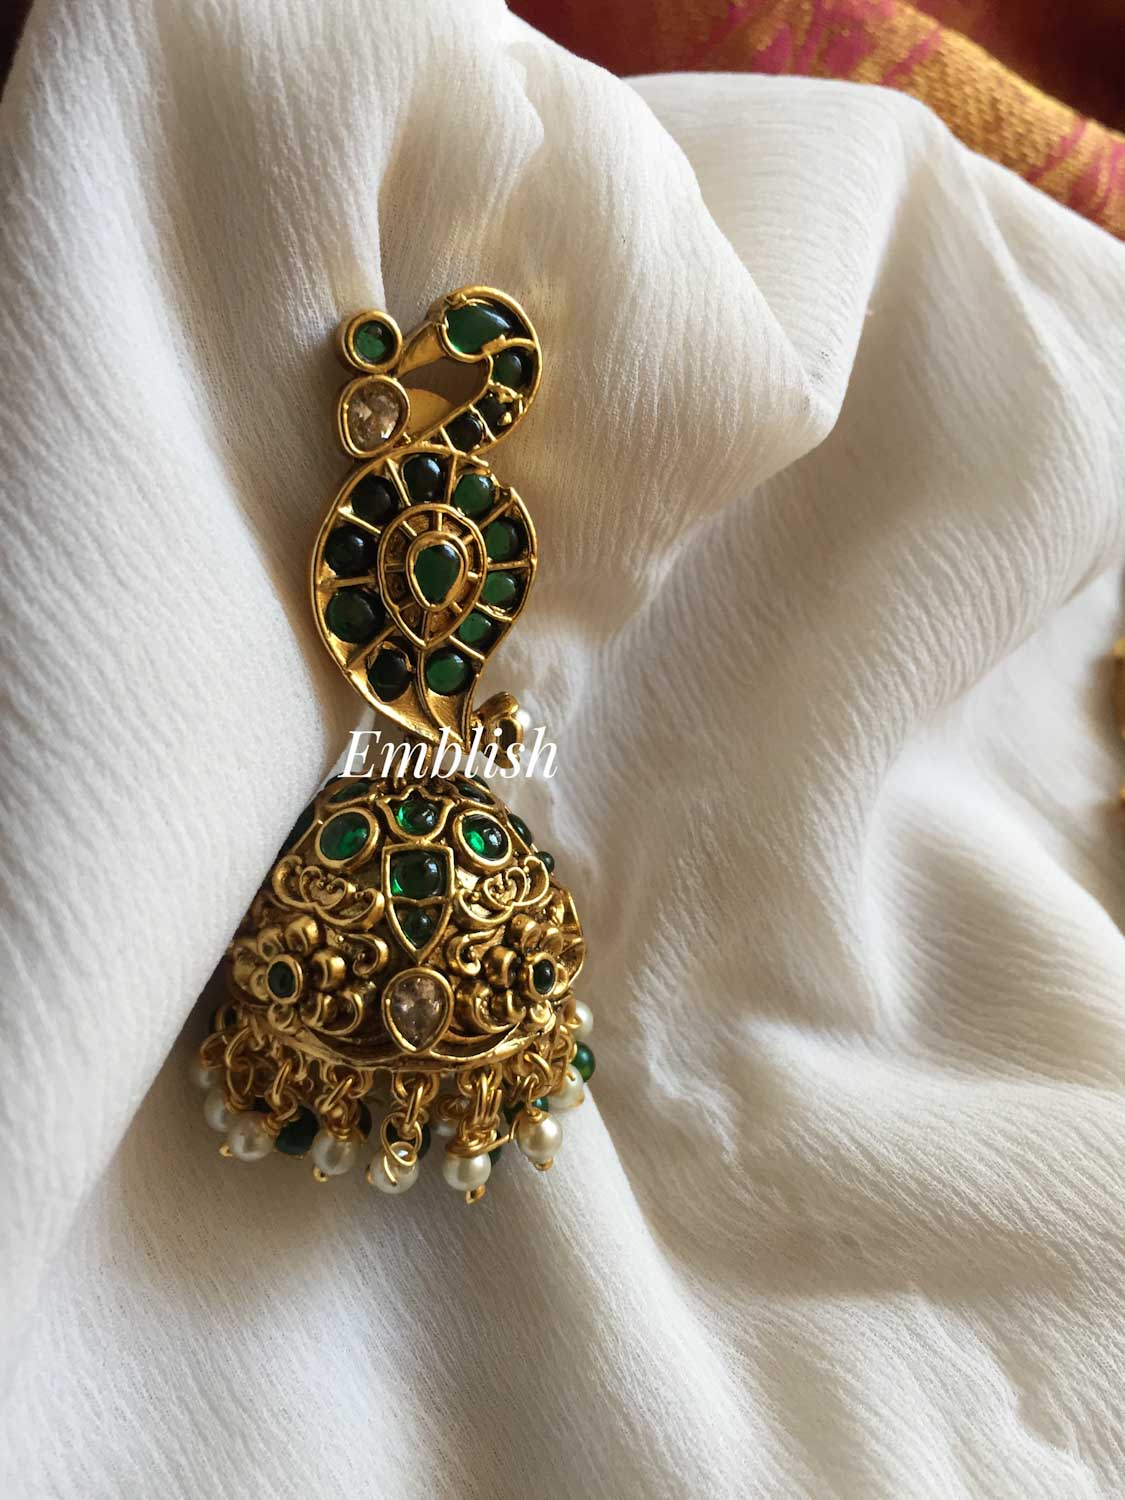 Gold alike antique Lakshmi mango kemp neckpiece-green beads 